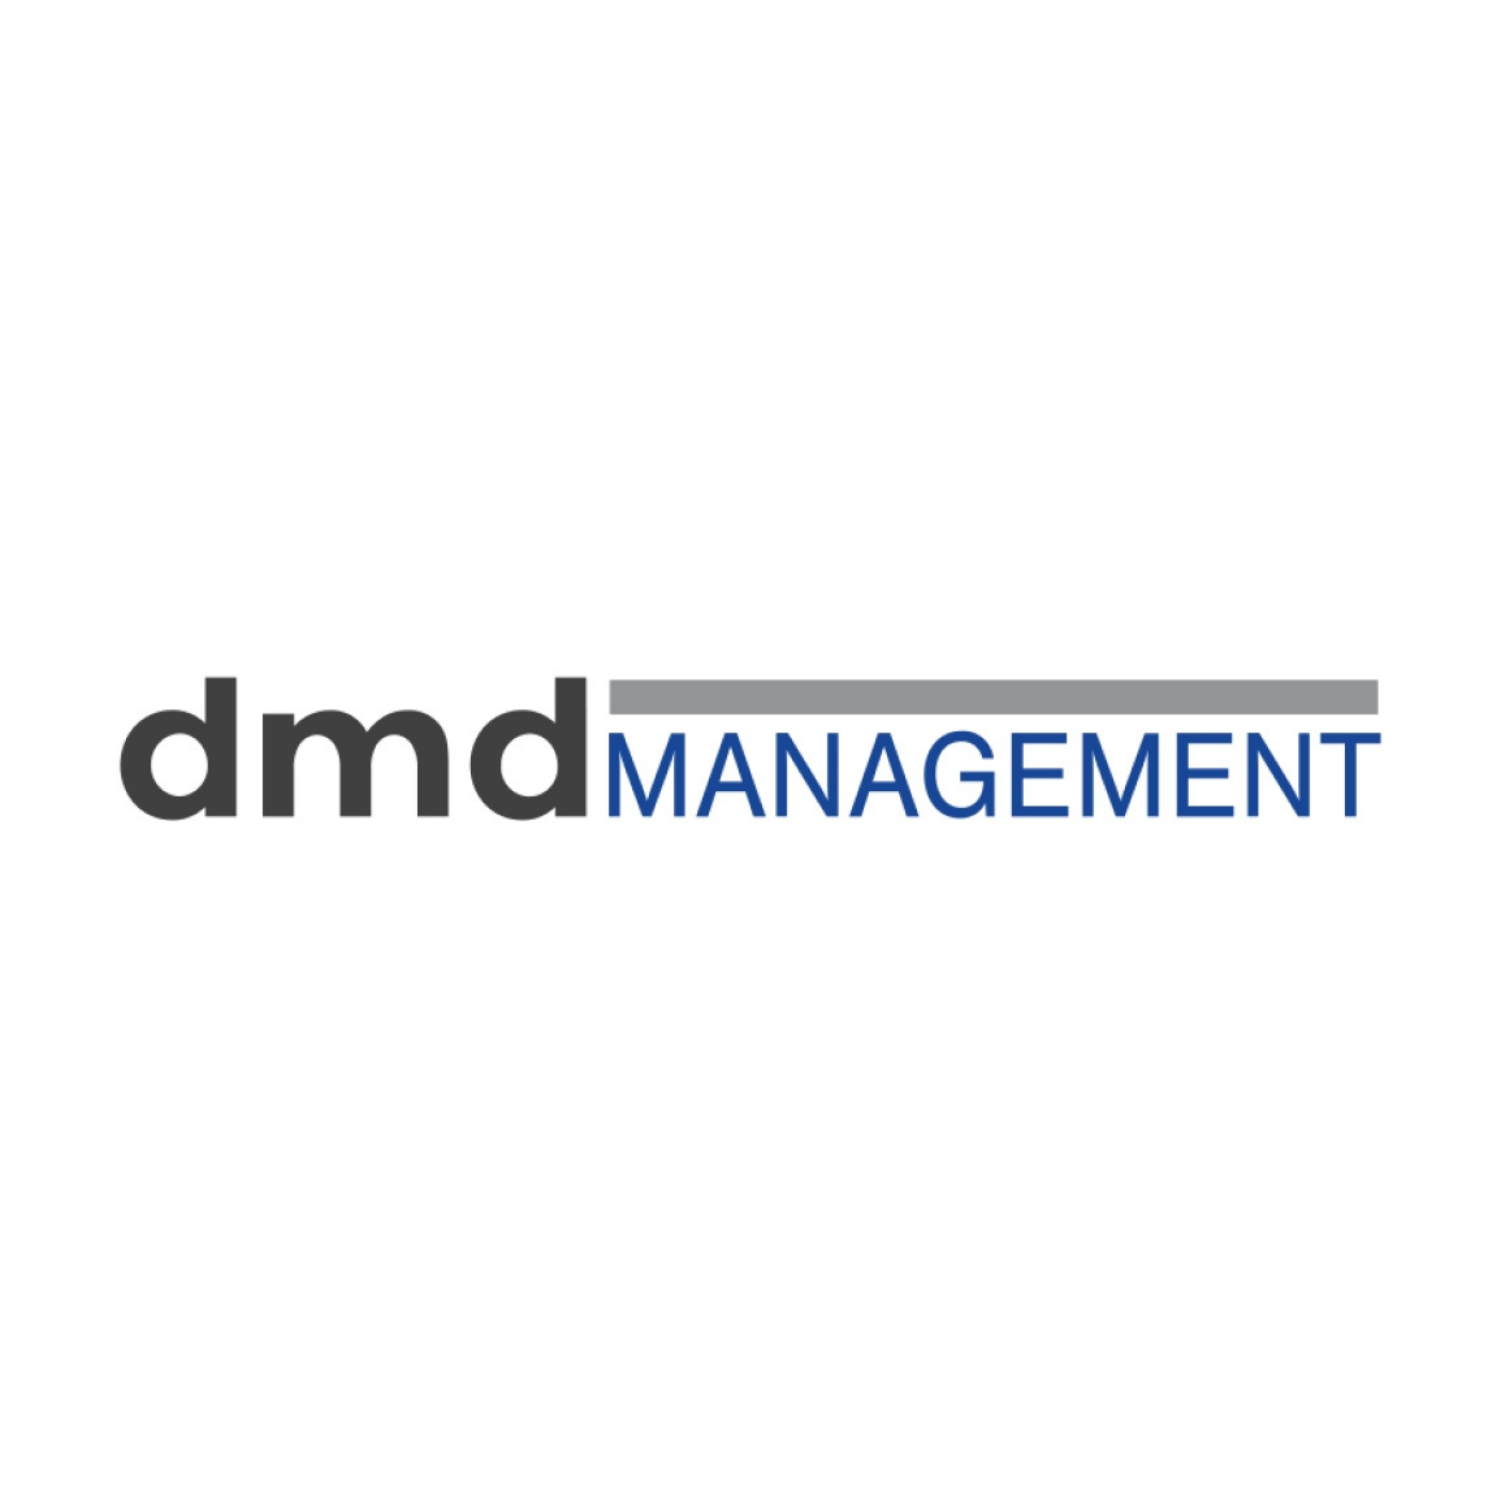 DMD management logo no background